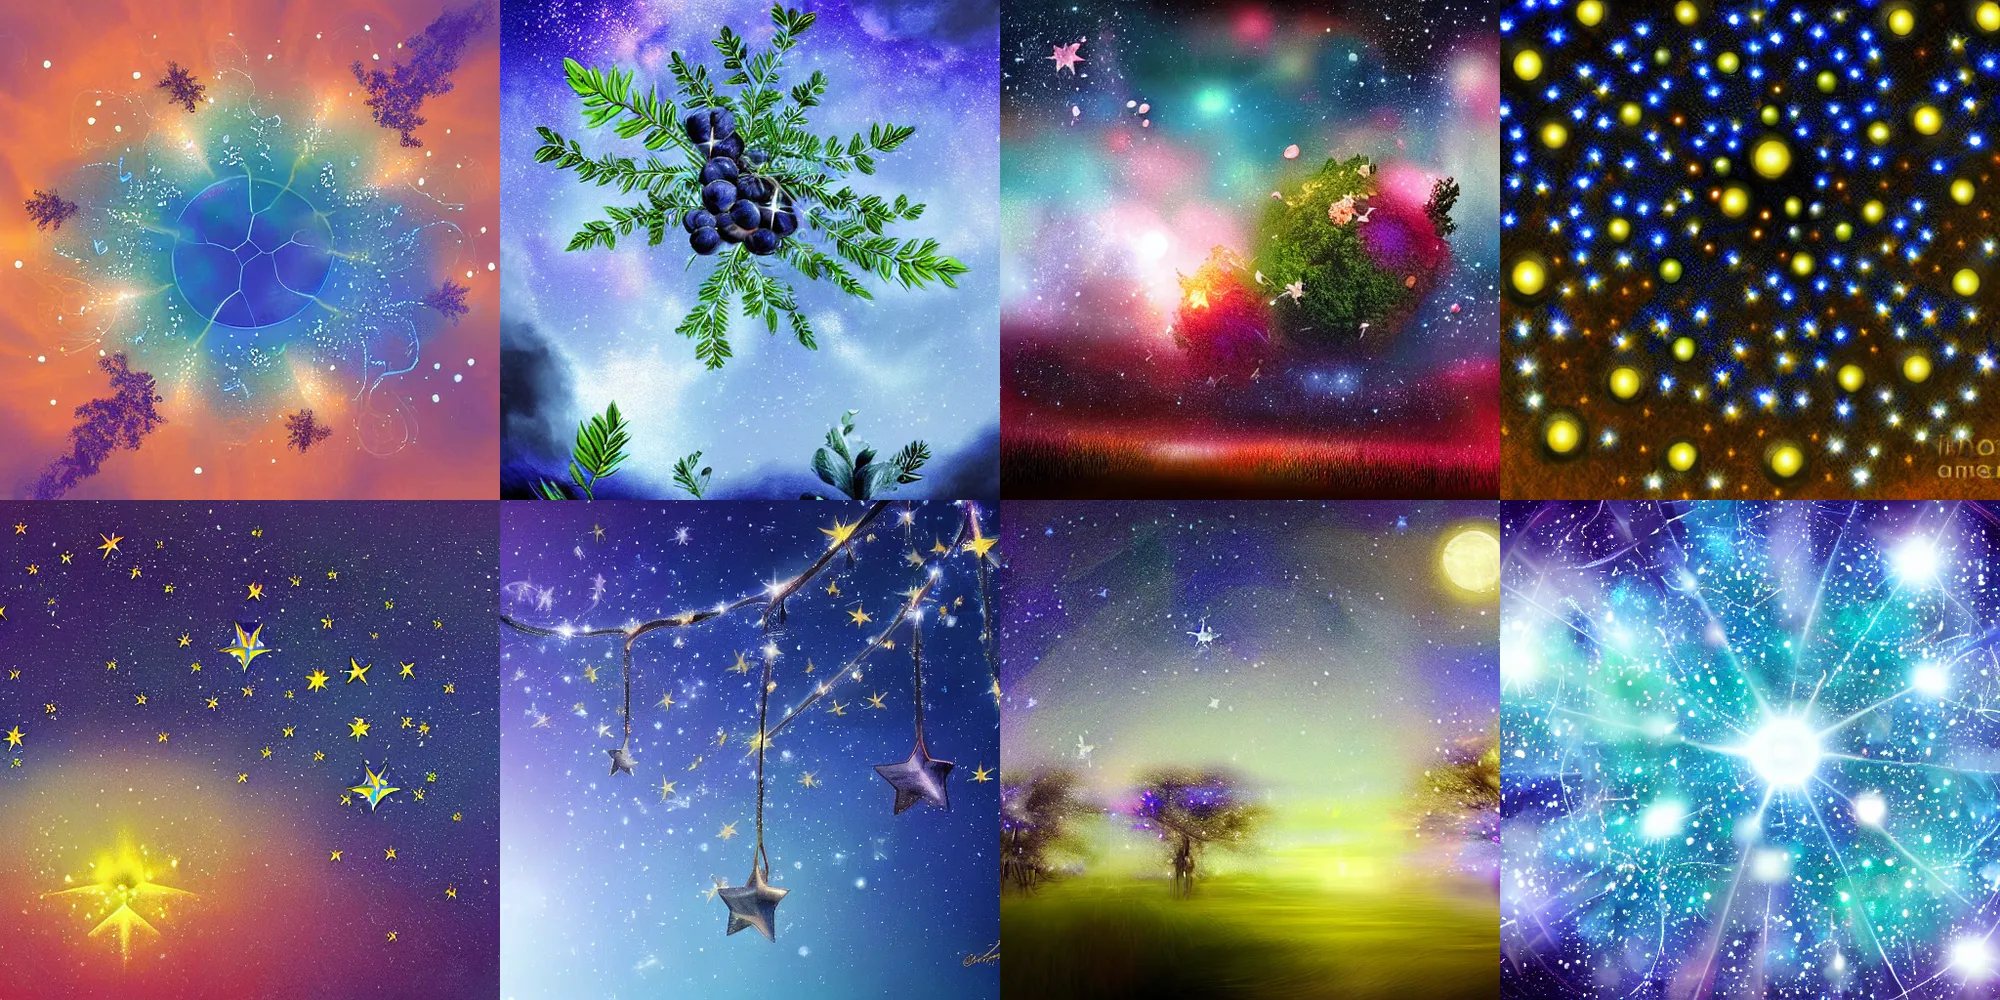 Prompt: The heaventree of stars hung with humid nightblue fruit, beautiful digital art